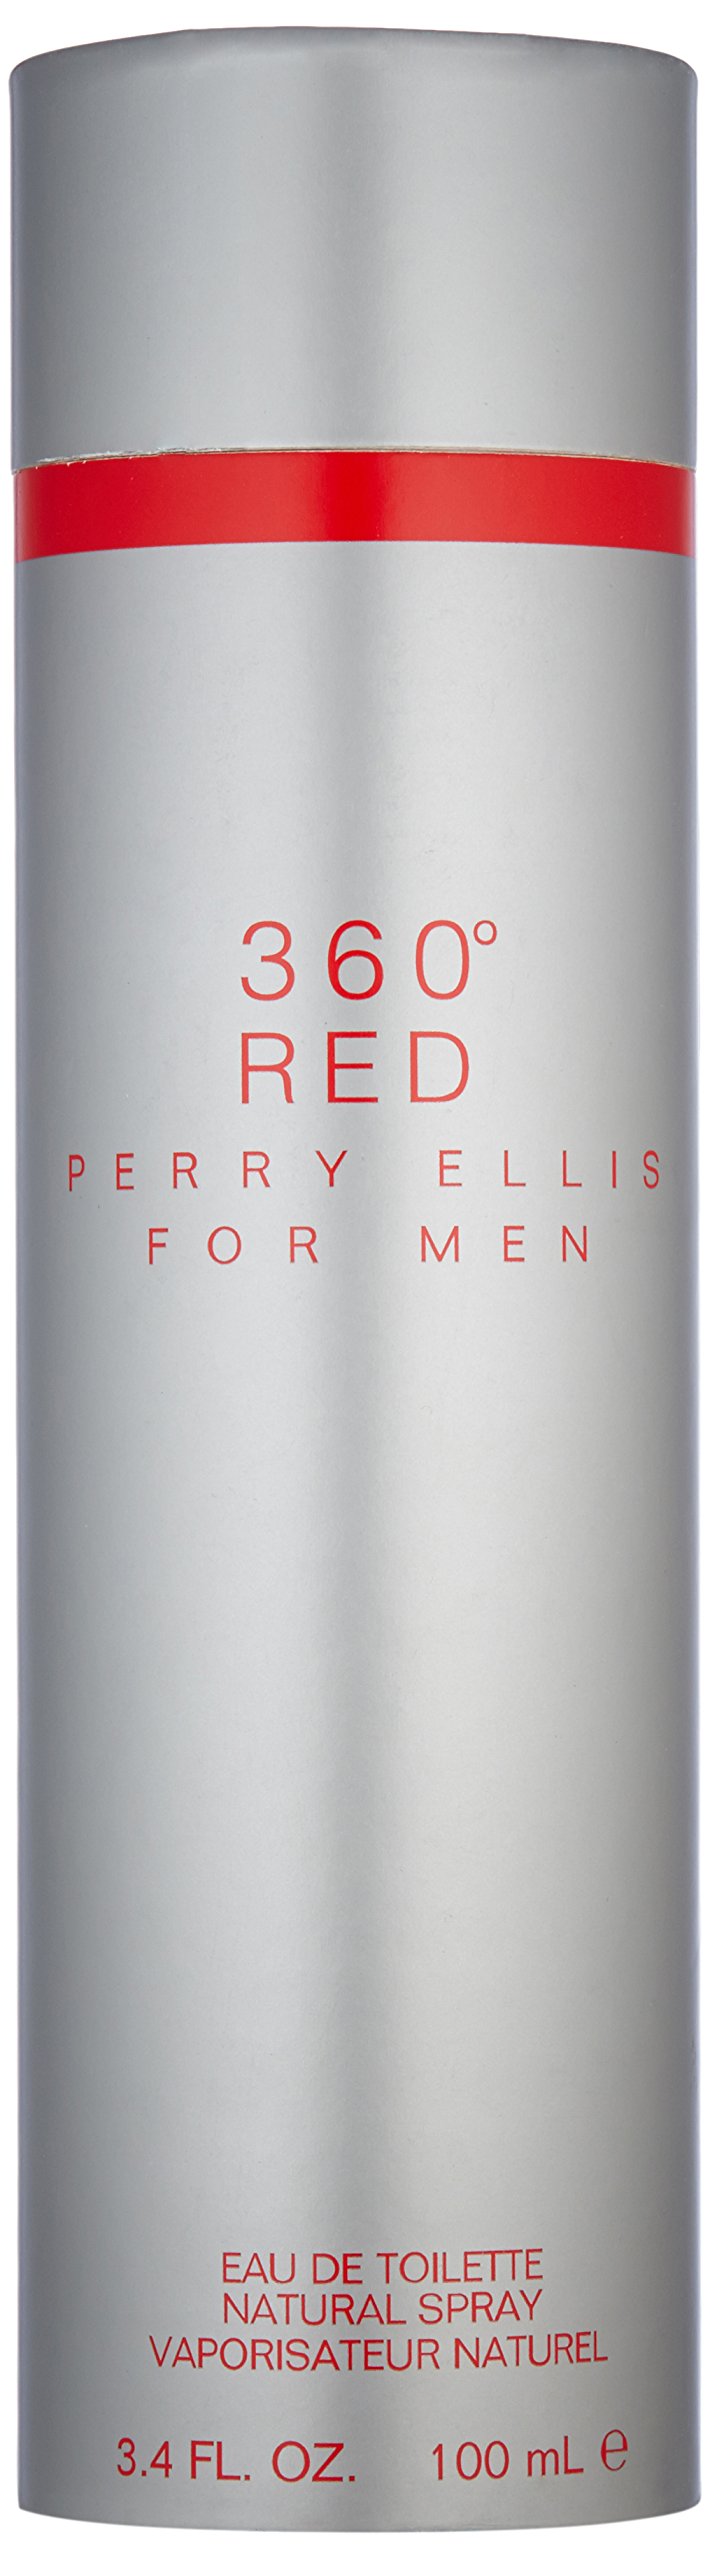 Perry Ellis 360 Red for Men, 3.4 fl oz EDT, Gray